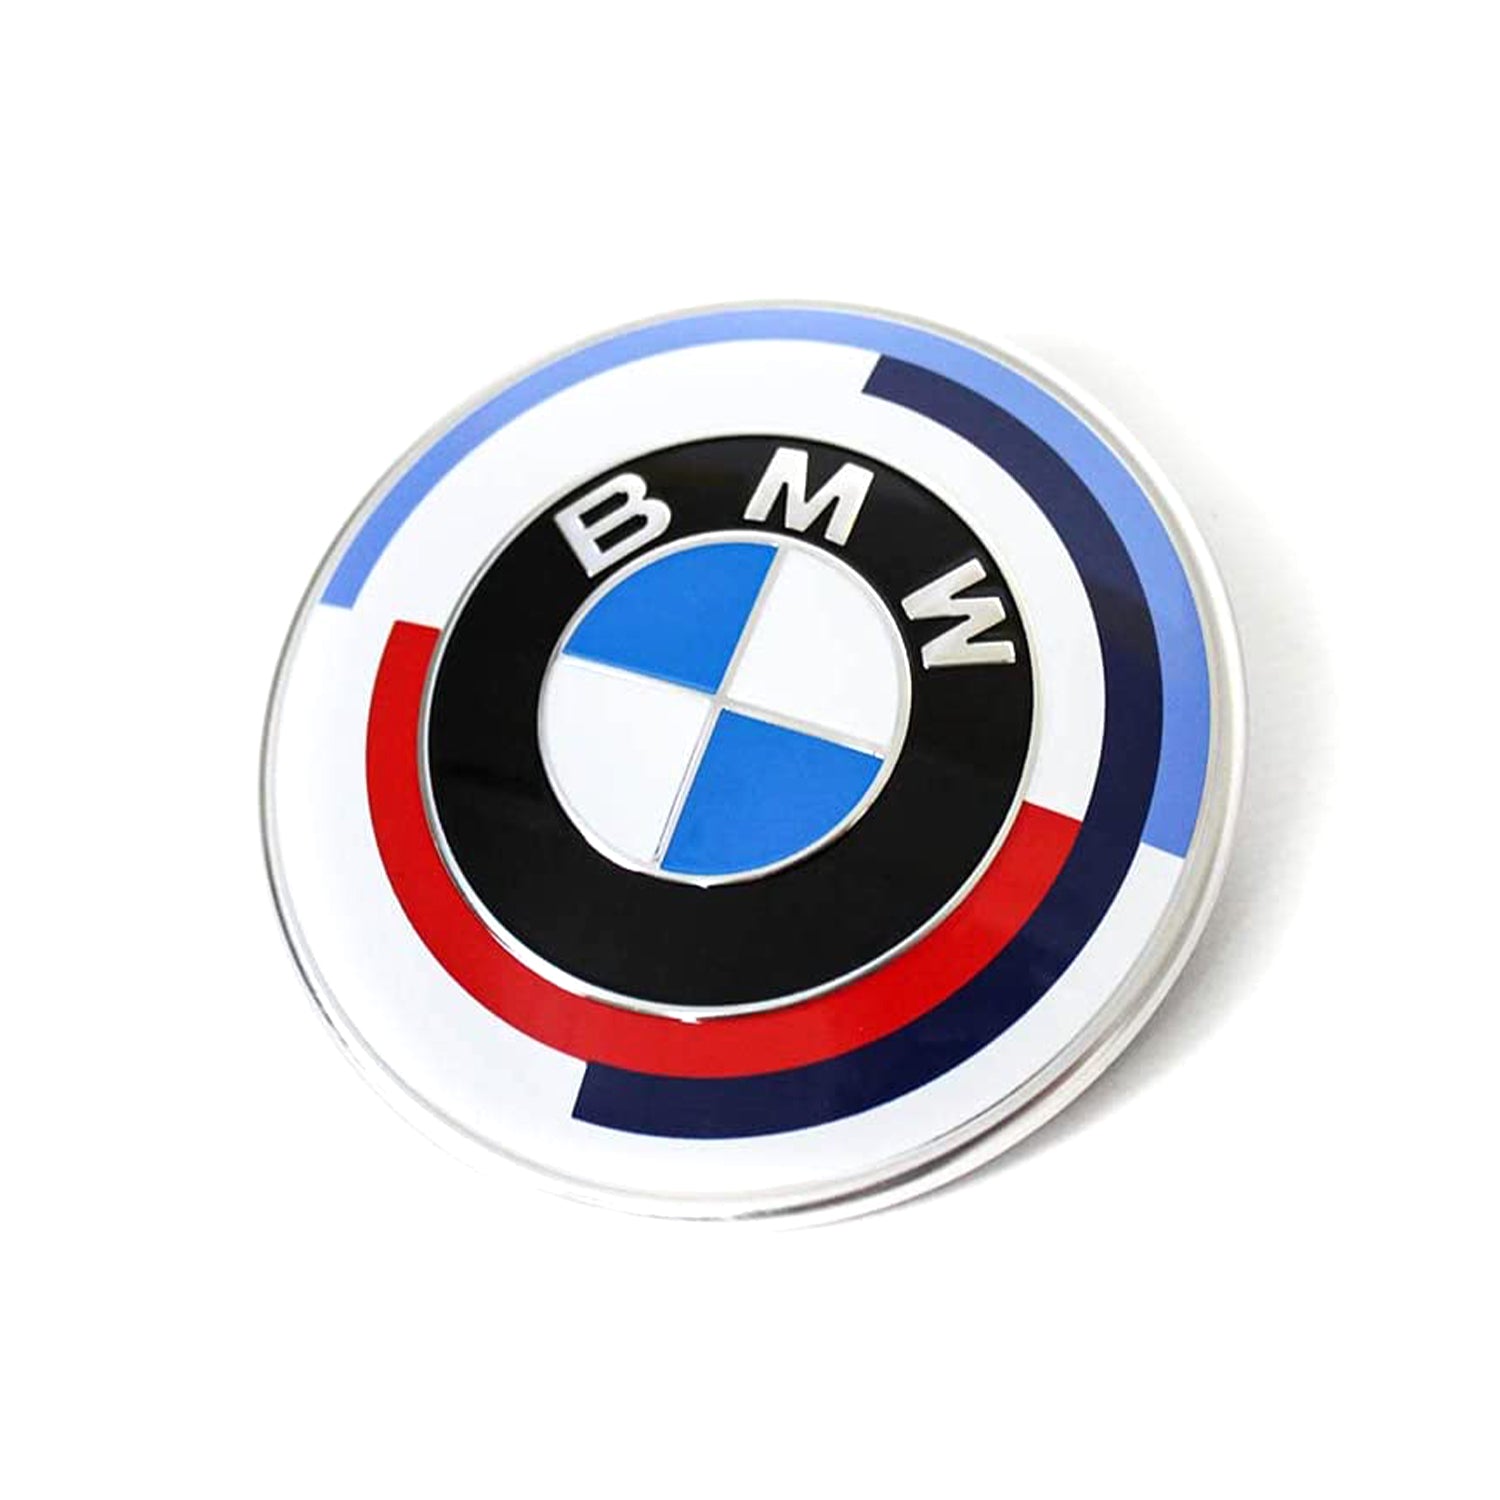 Genuine BMW F40 1 Series 50th Anniversary Rear Badge